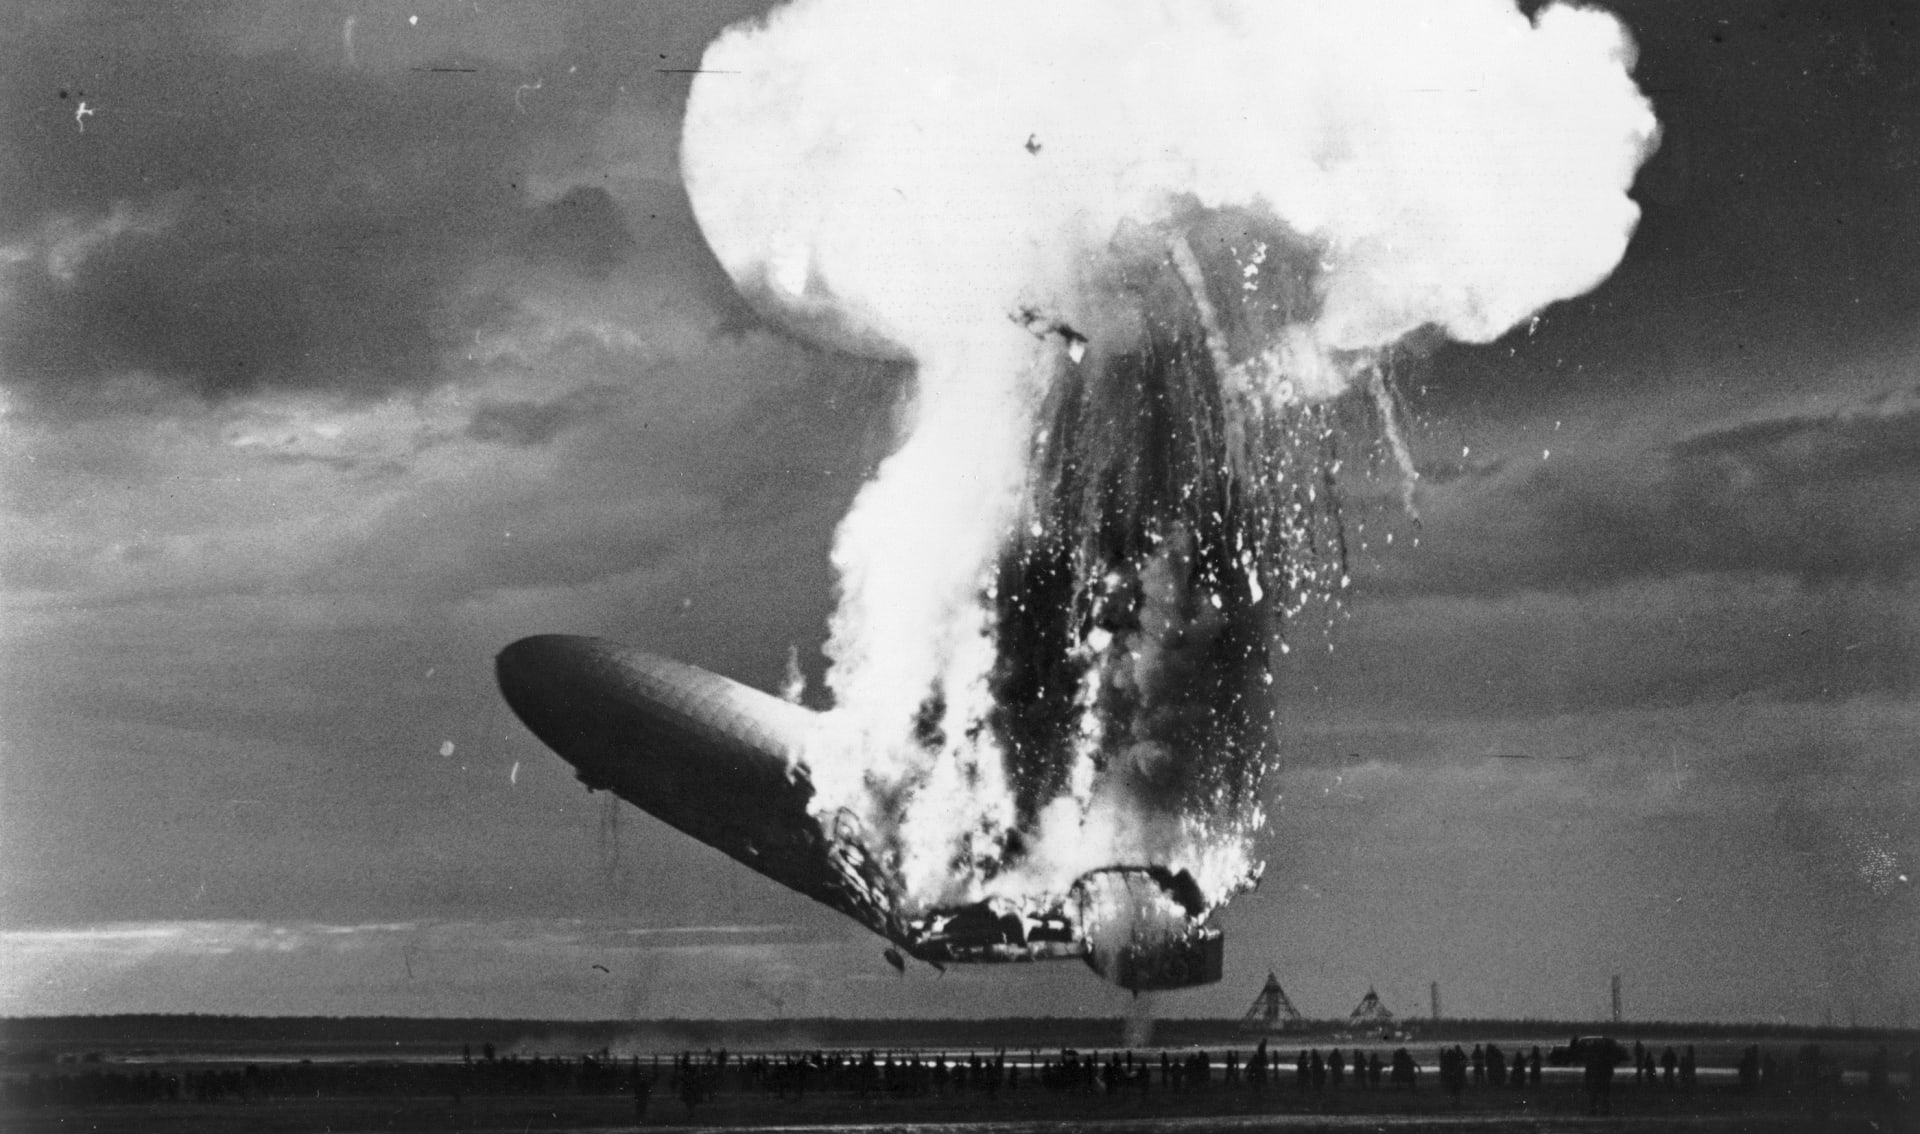 vzducholoď Hindenburg